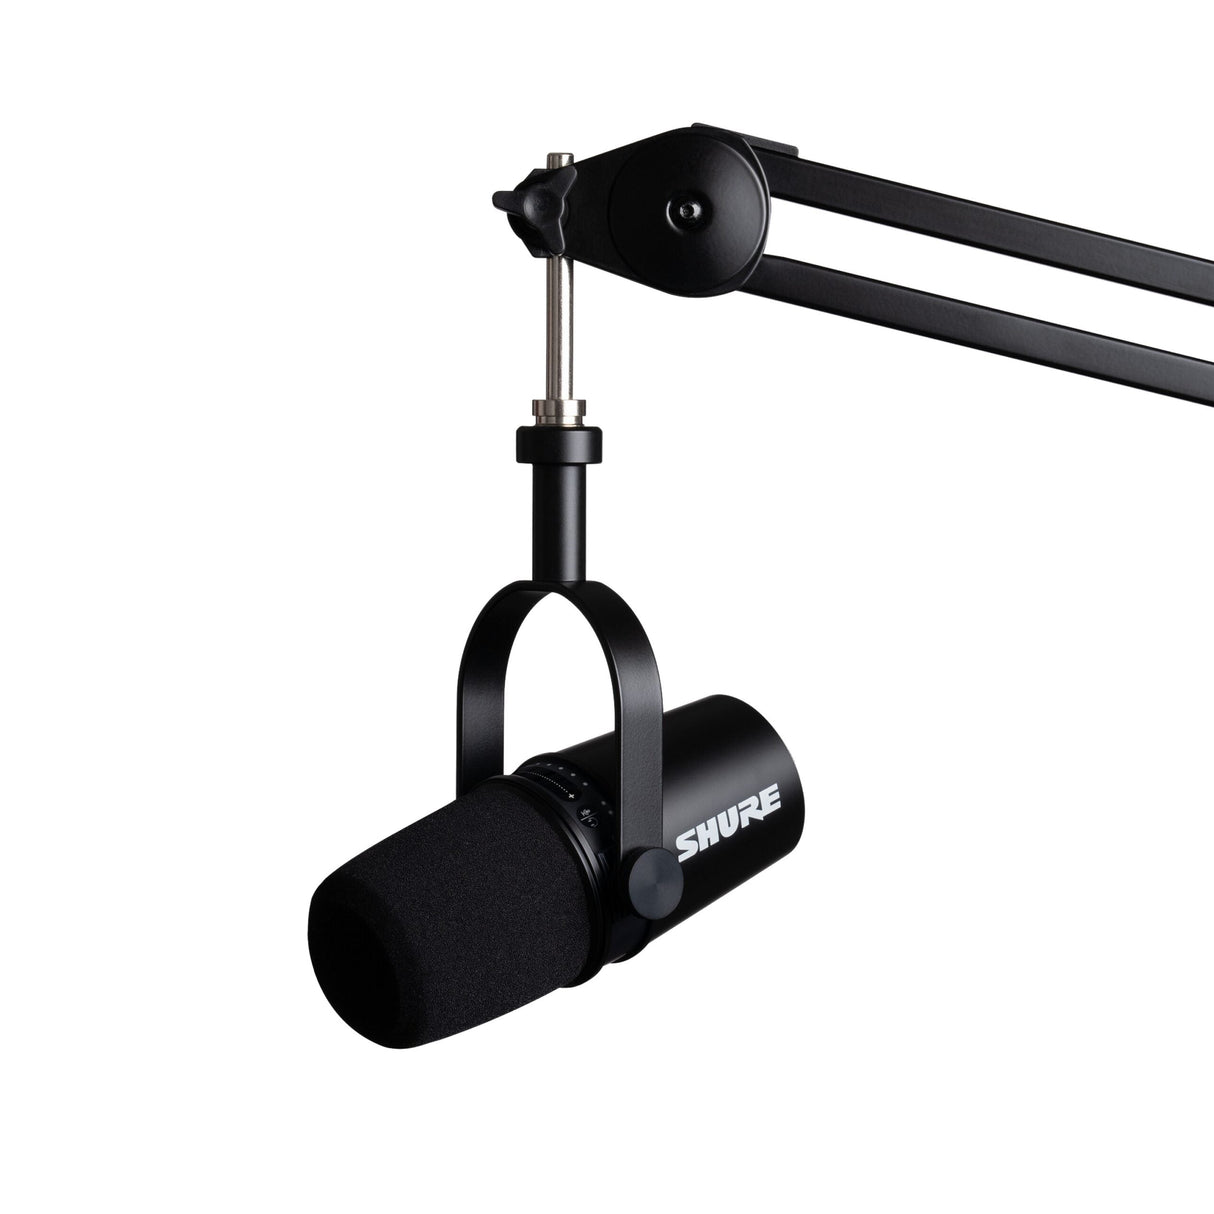 Shure MV7-K XLR/USB Dynamic Podcasting Microphone, Black (Used)